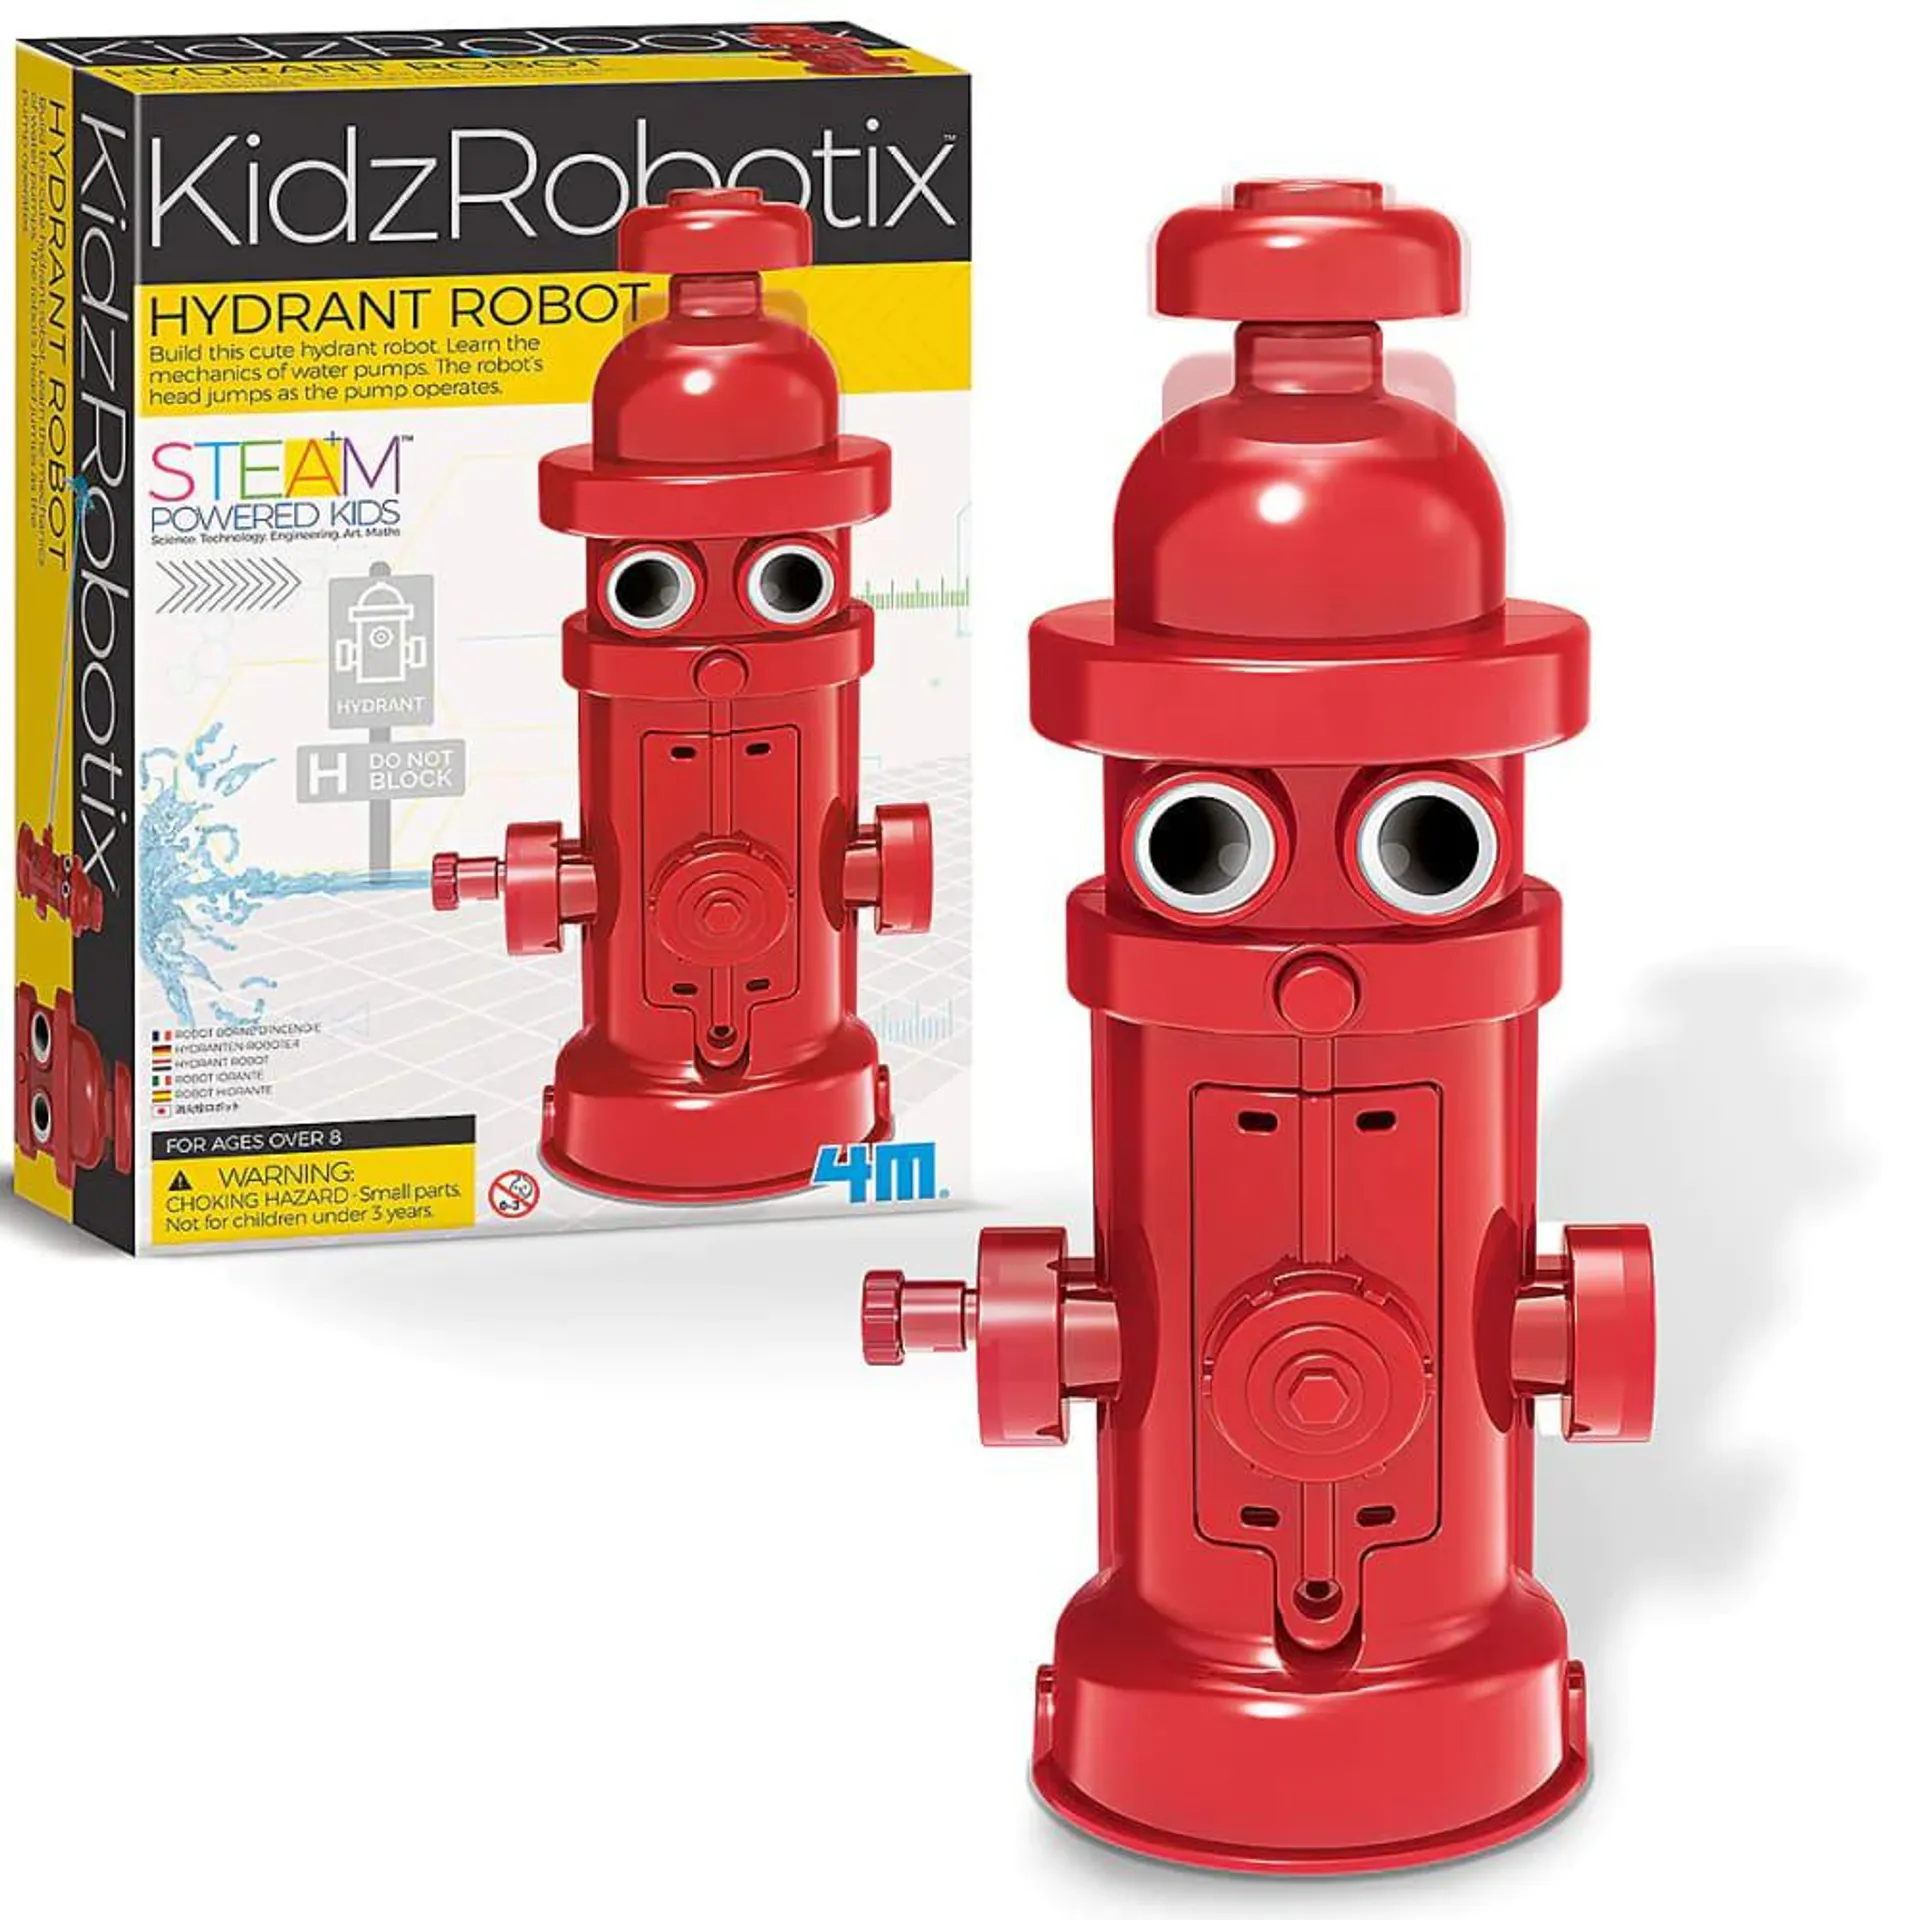 Kidz Robotix Water Hydrant